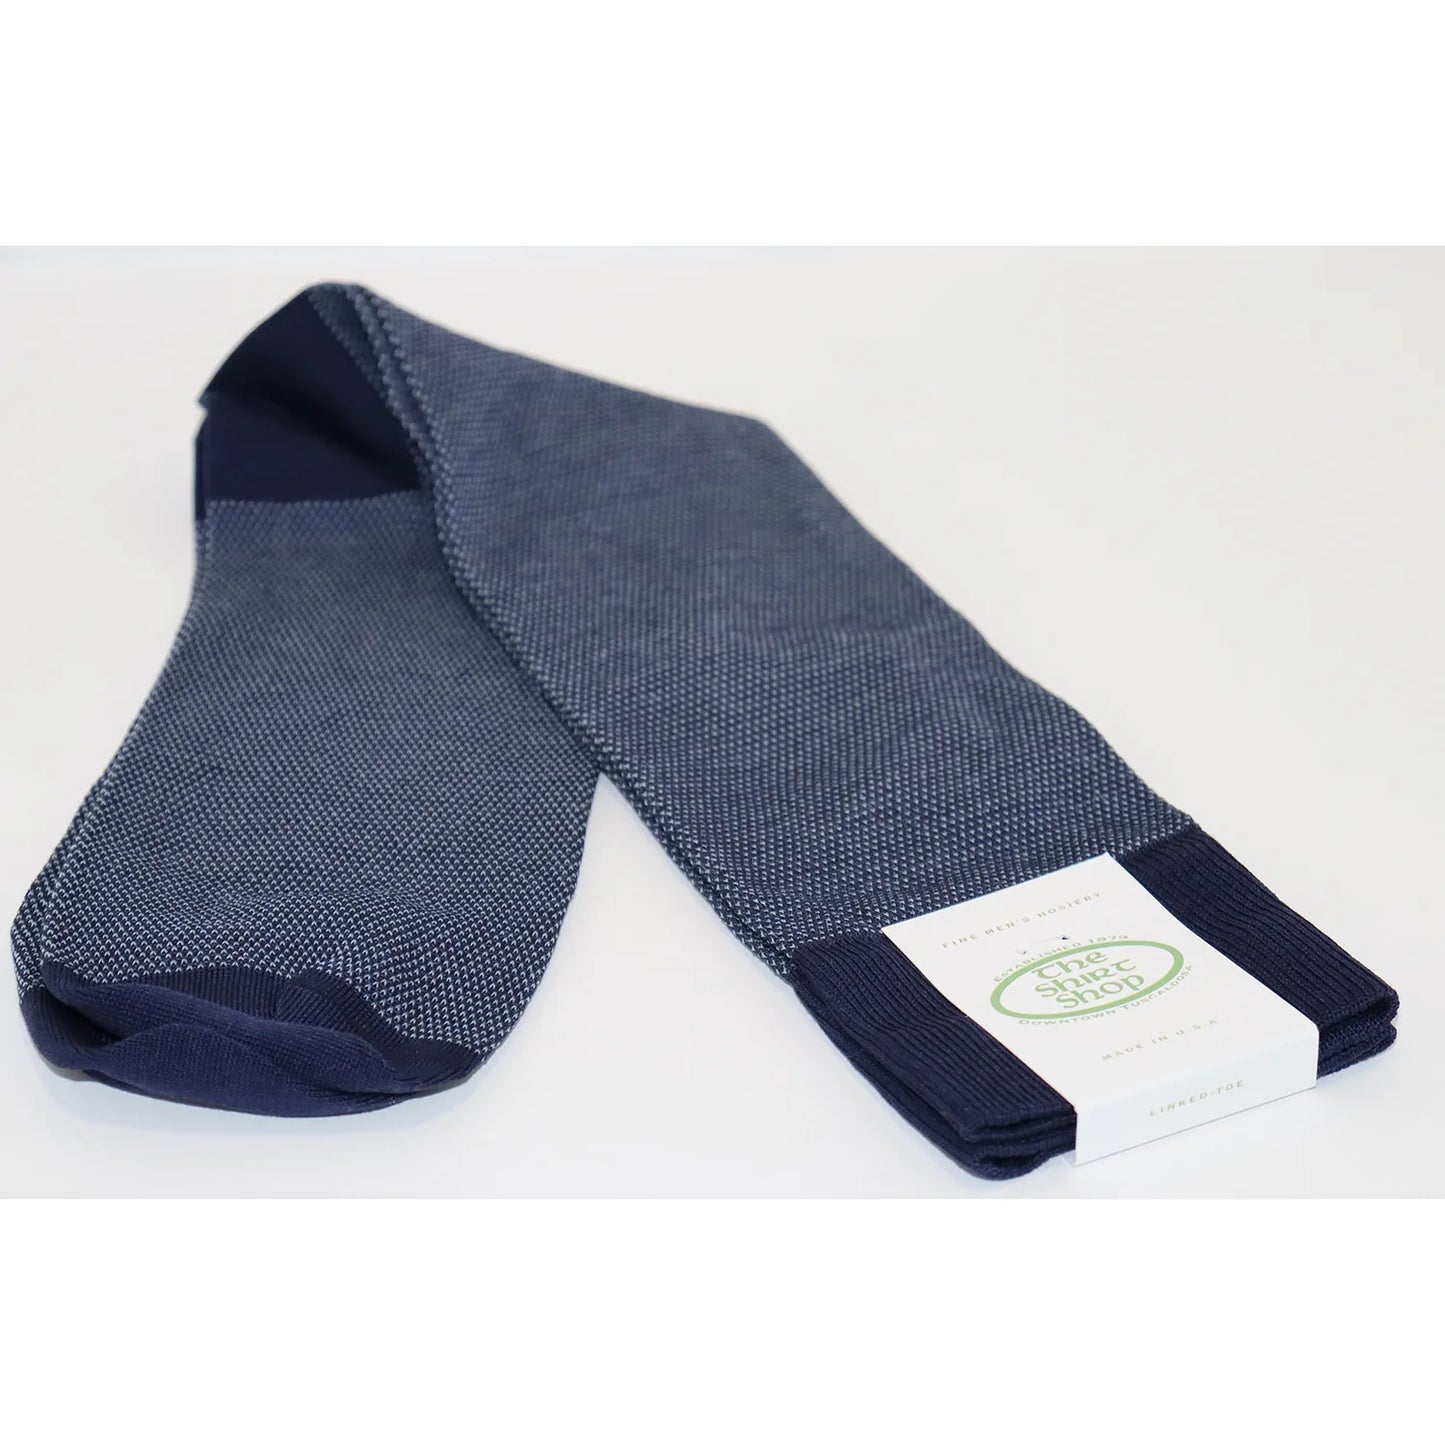 The Shirt Shop Dress Socks - Navy/Sky Blue Nailhead (2 Lengths)